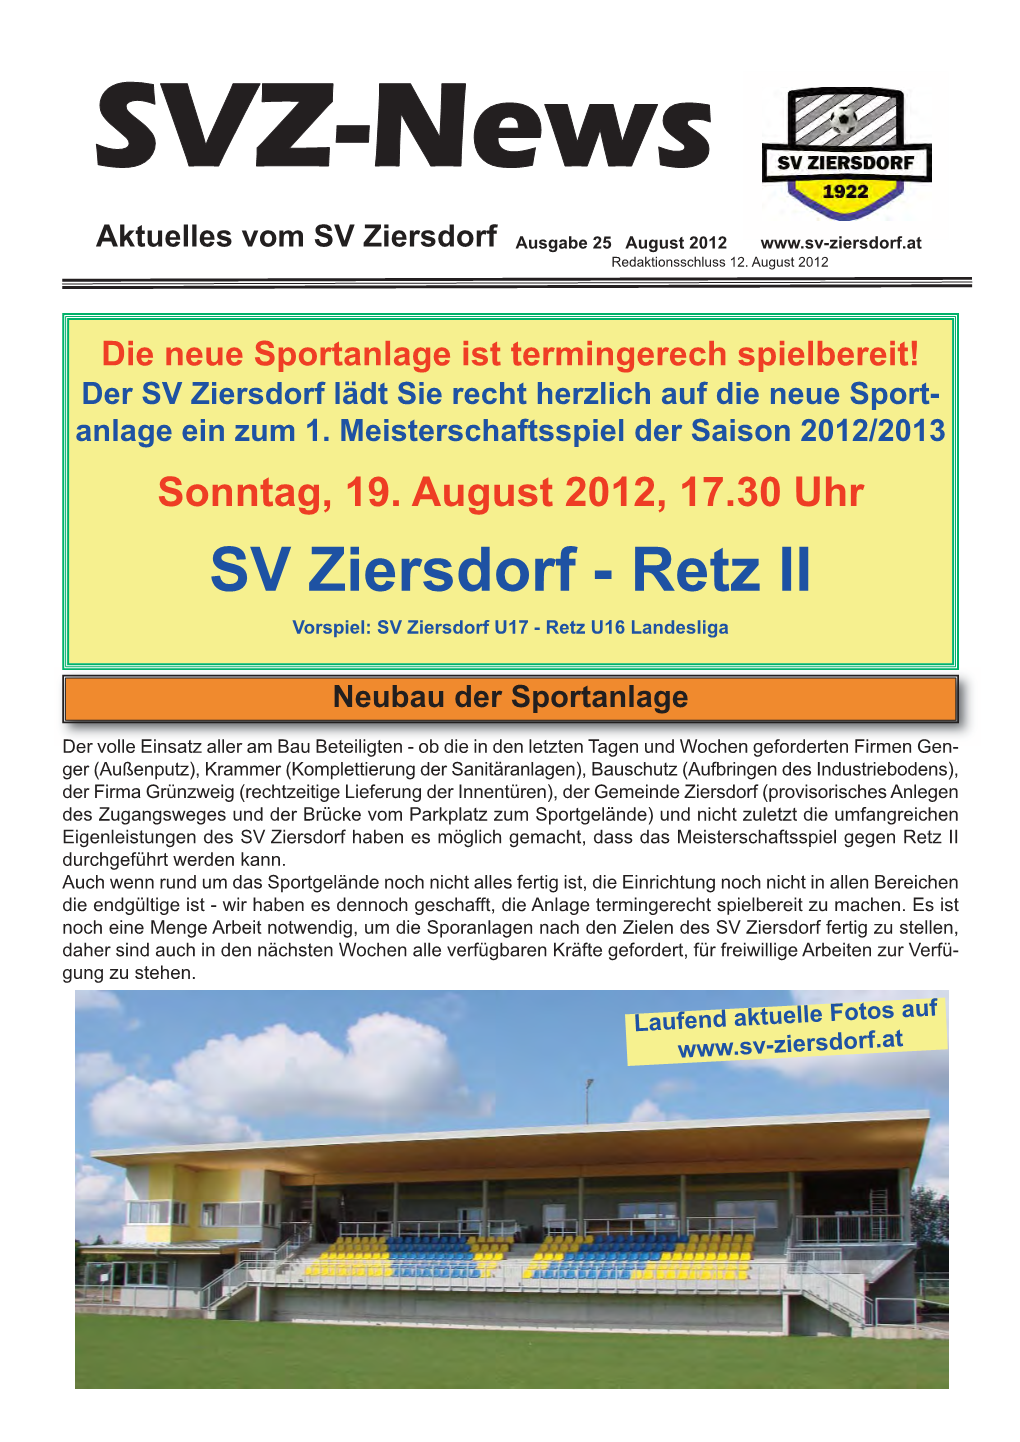 Retz II Vorspiel: SV Ziersdorf U17 - Retz U16 Landesliga